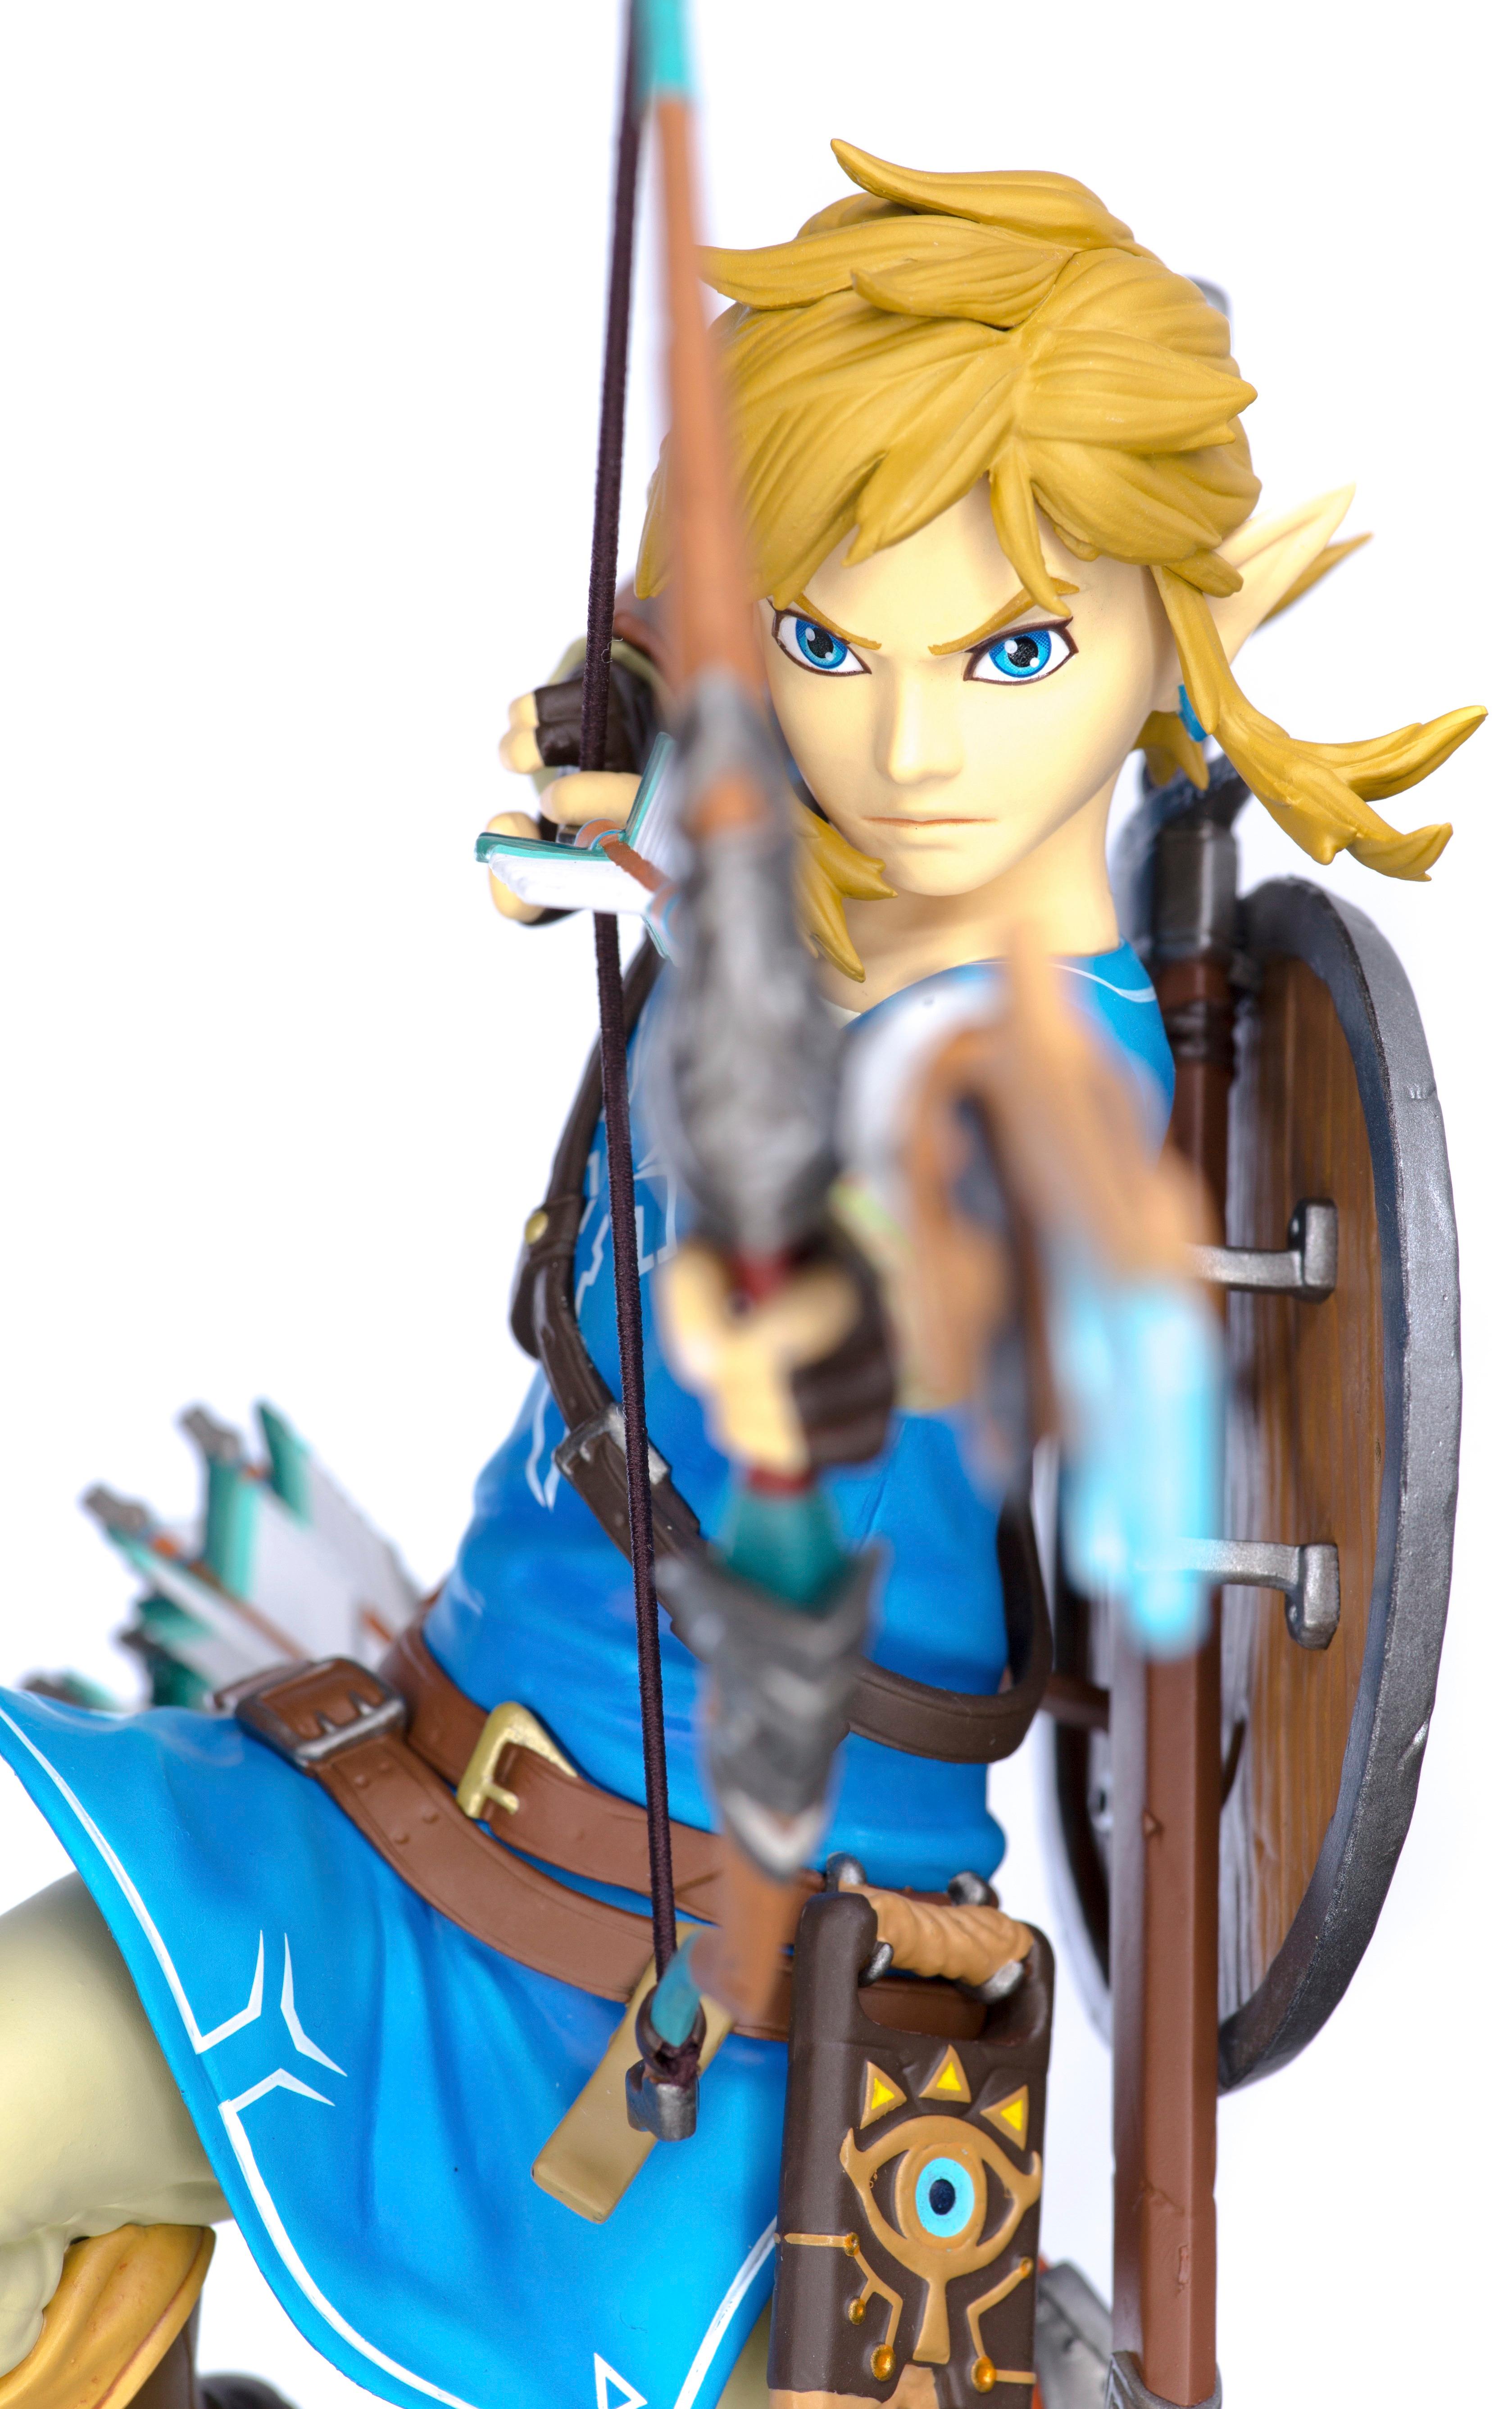 The Legend of Zelda: Breath of the Wild Link 4-Inch Action Figure